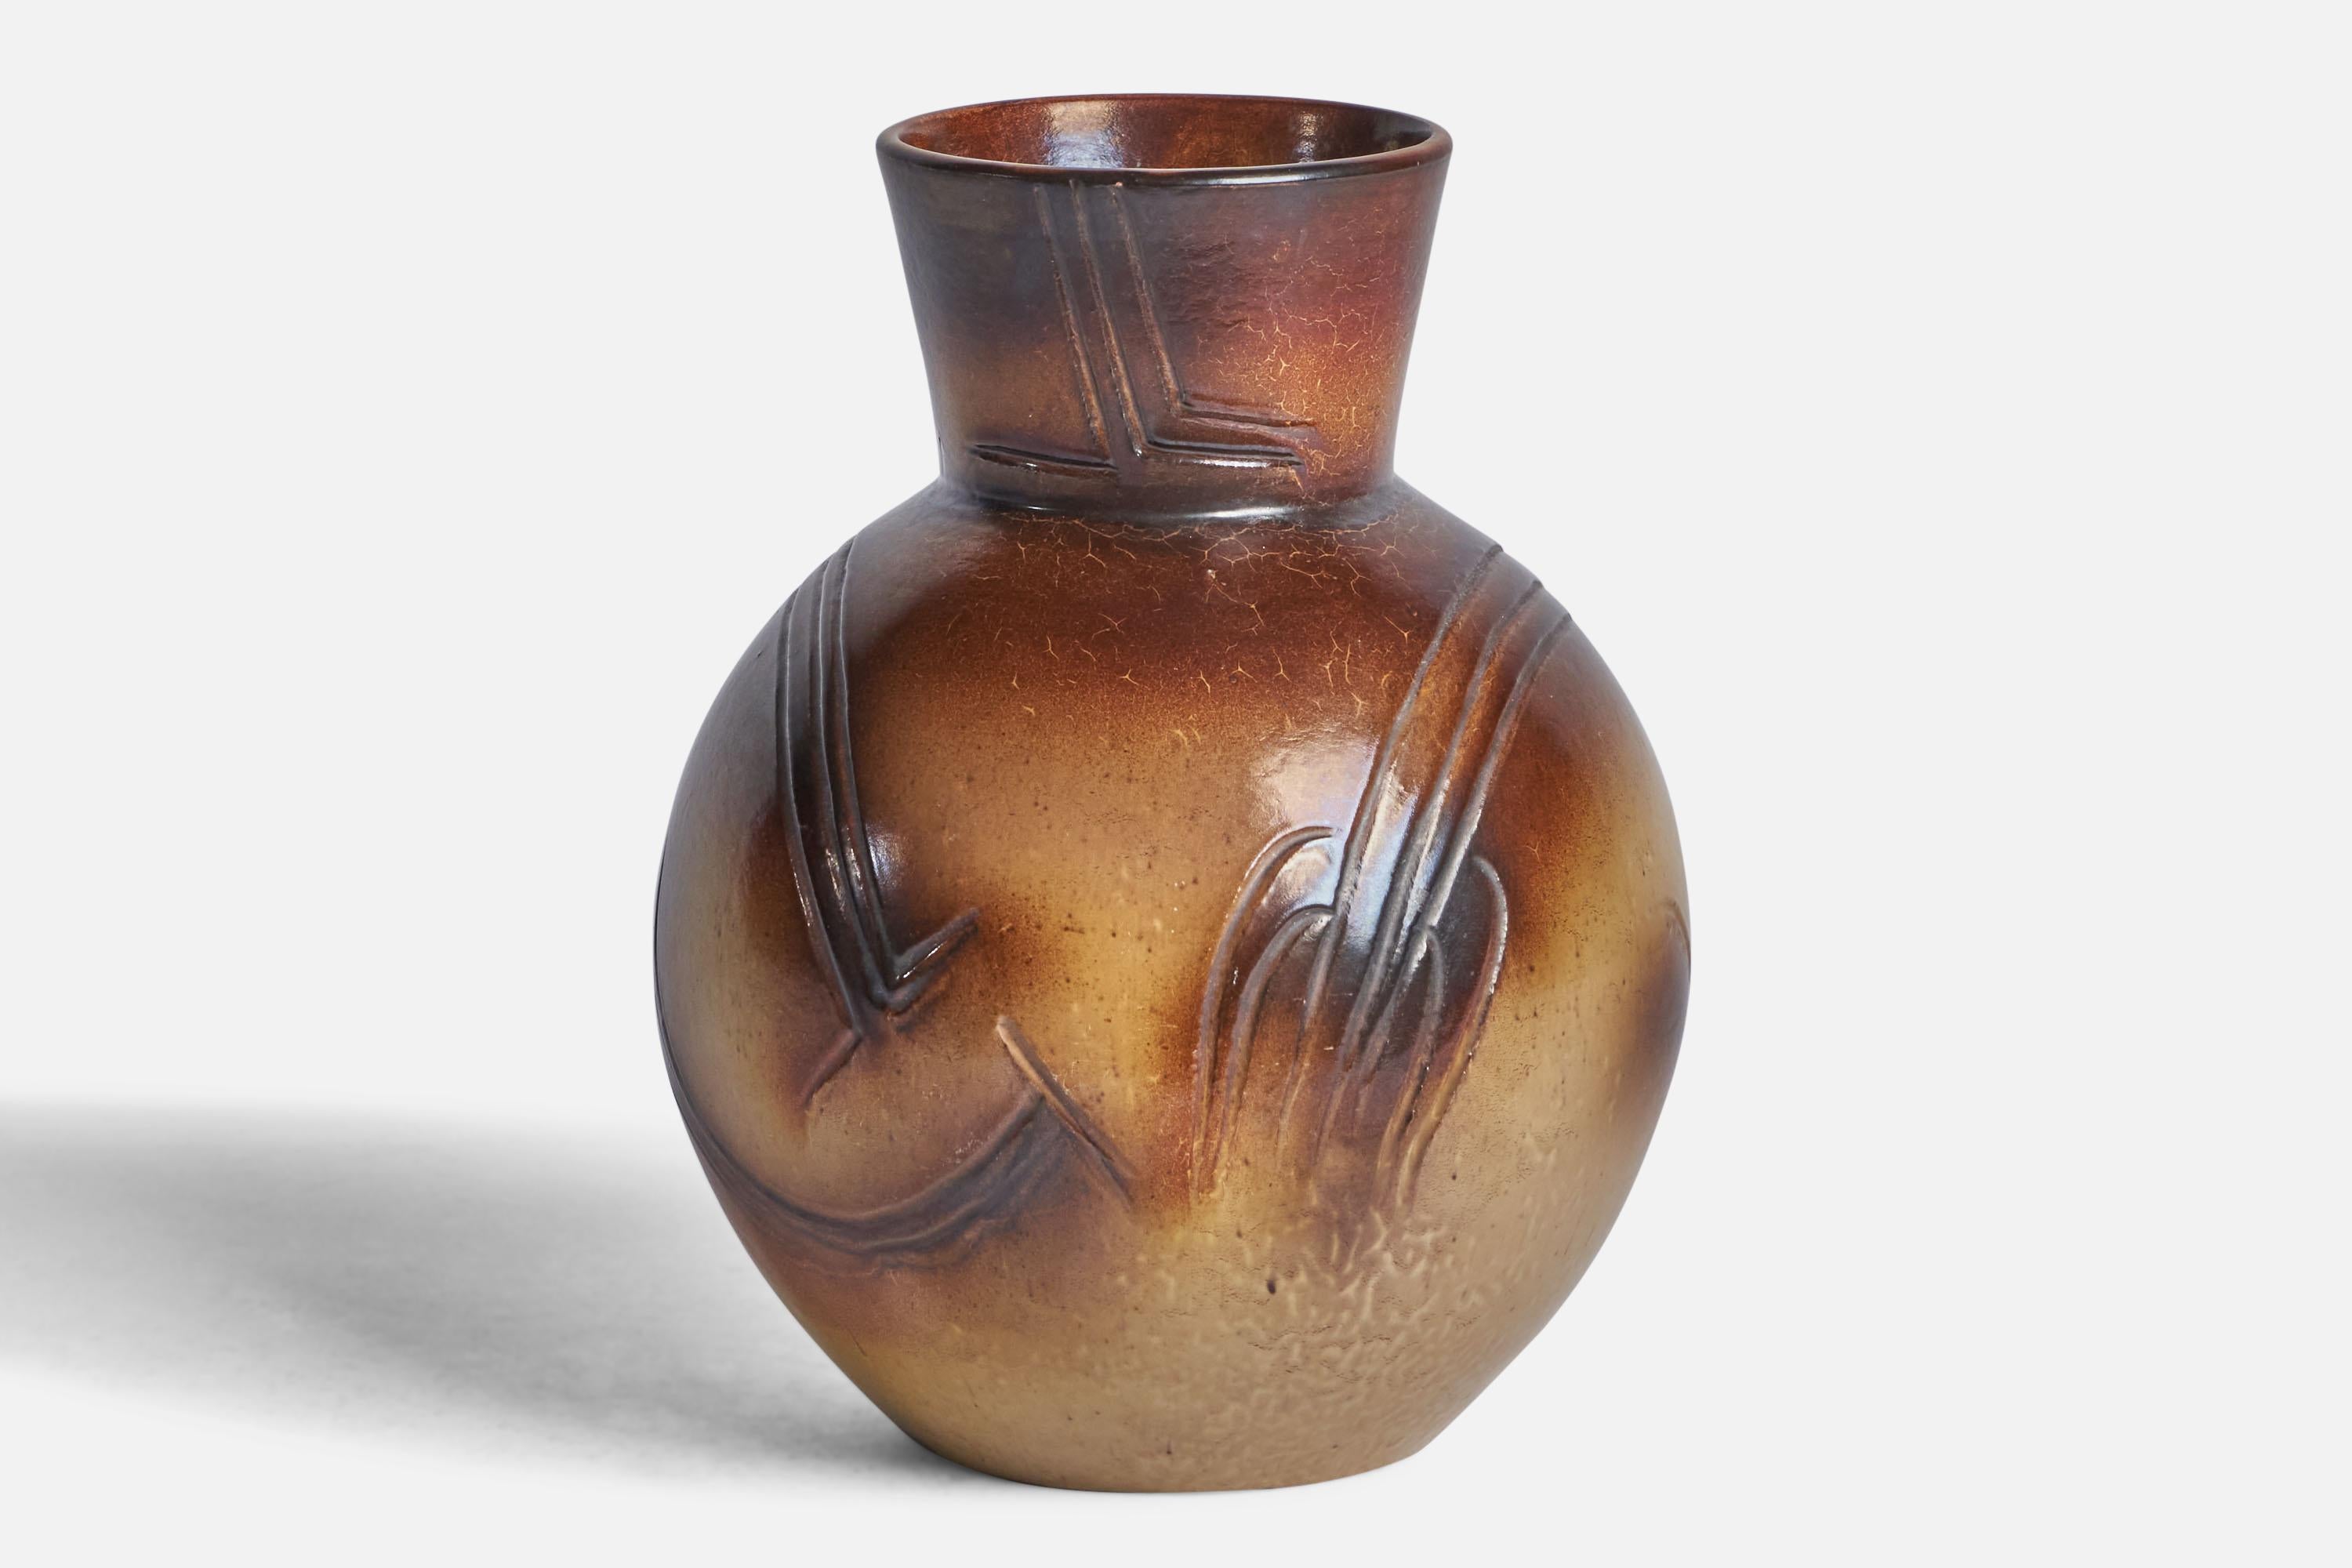 A beige and brown-glazed earthenware vase designed by Erik Mornils and produced by Nittsjö, Sweden, c. 1930s.